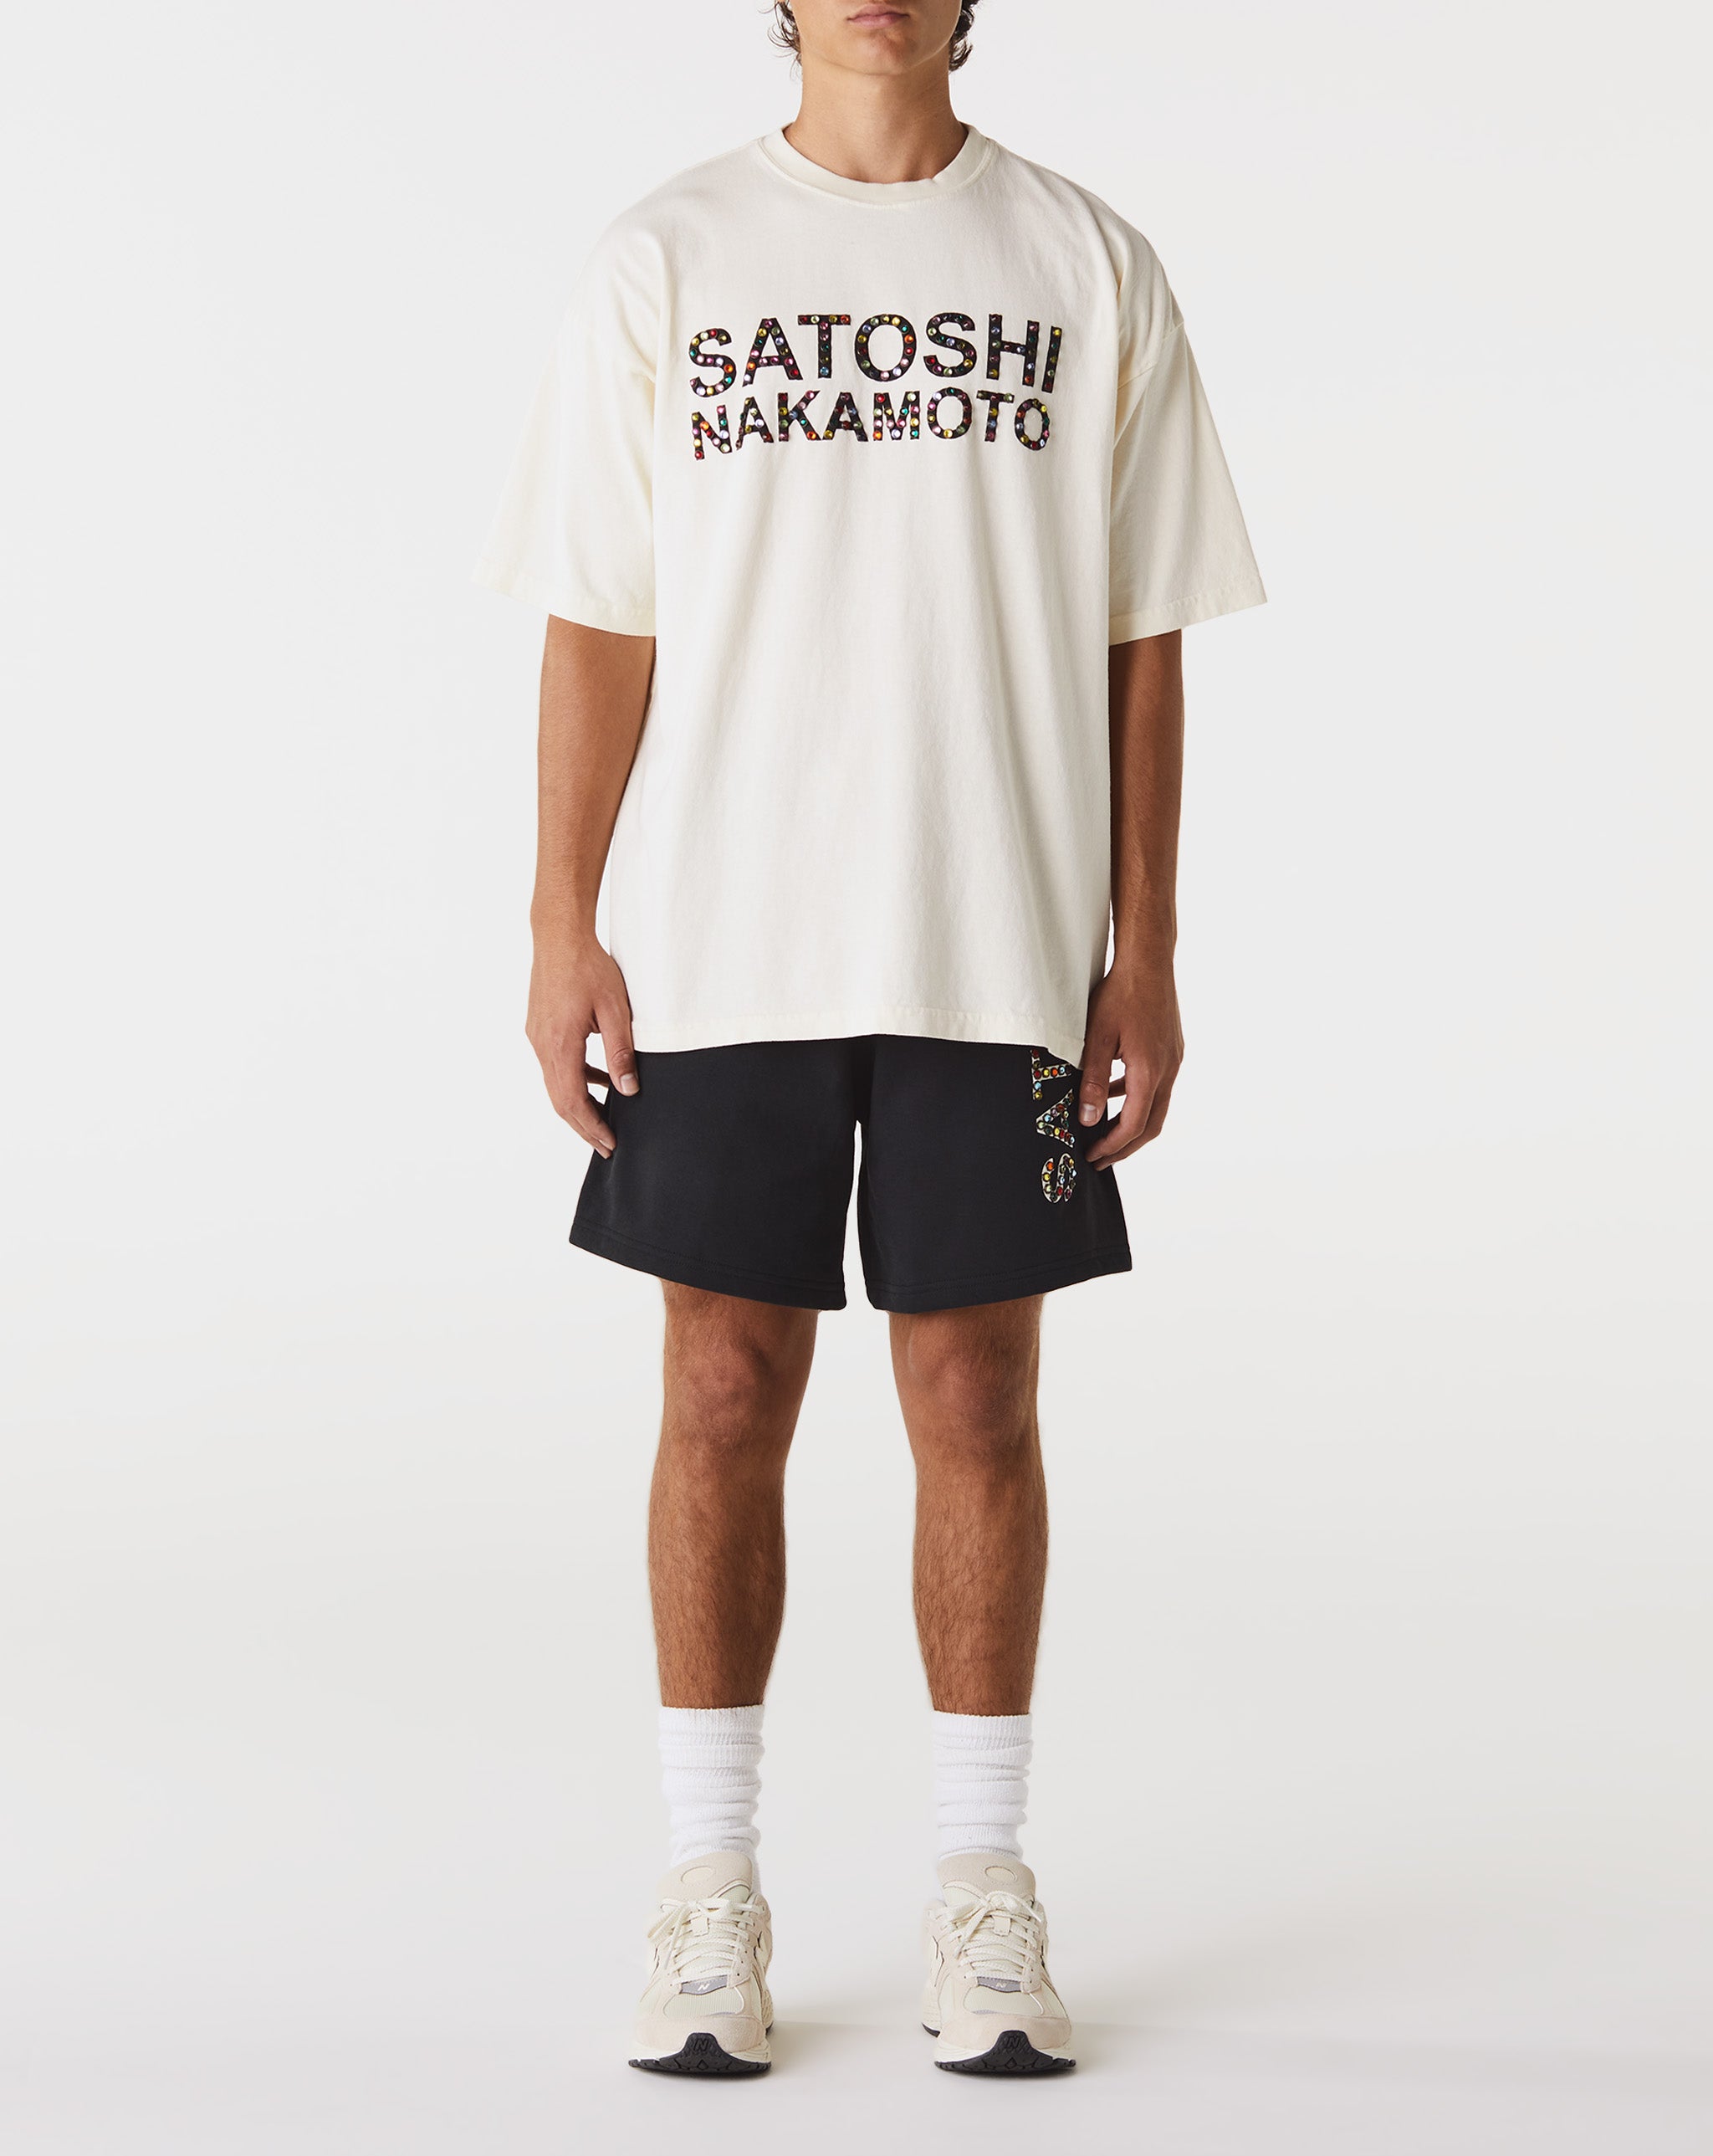 Satoshi Nakamoto Single Knee Shorts  - Cheap 127-0 Jordan outlet